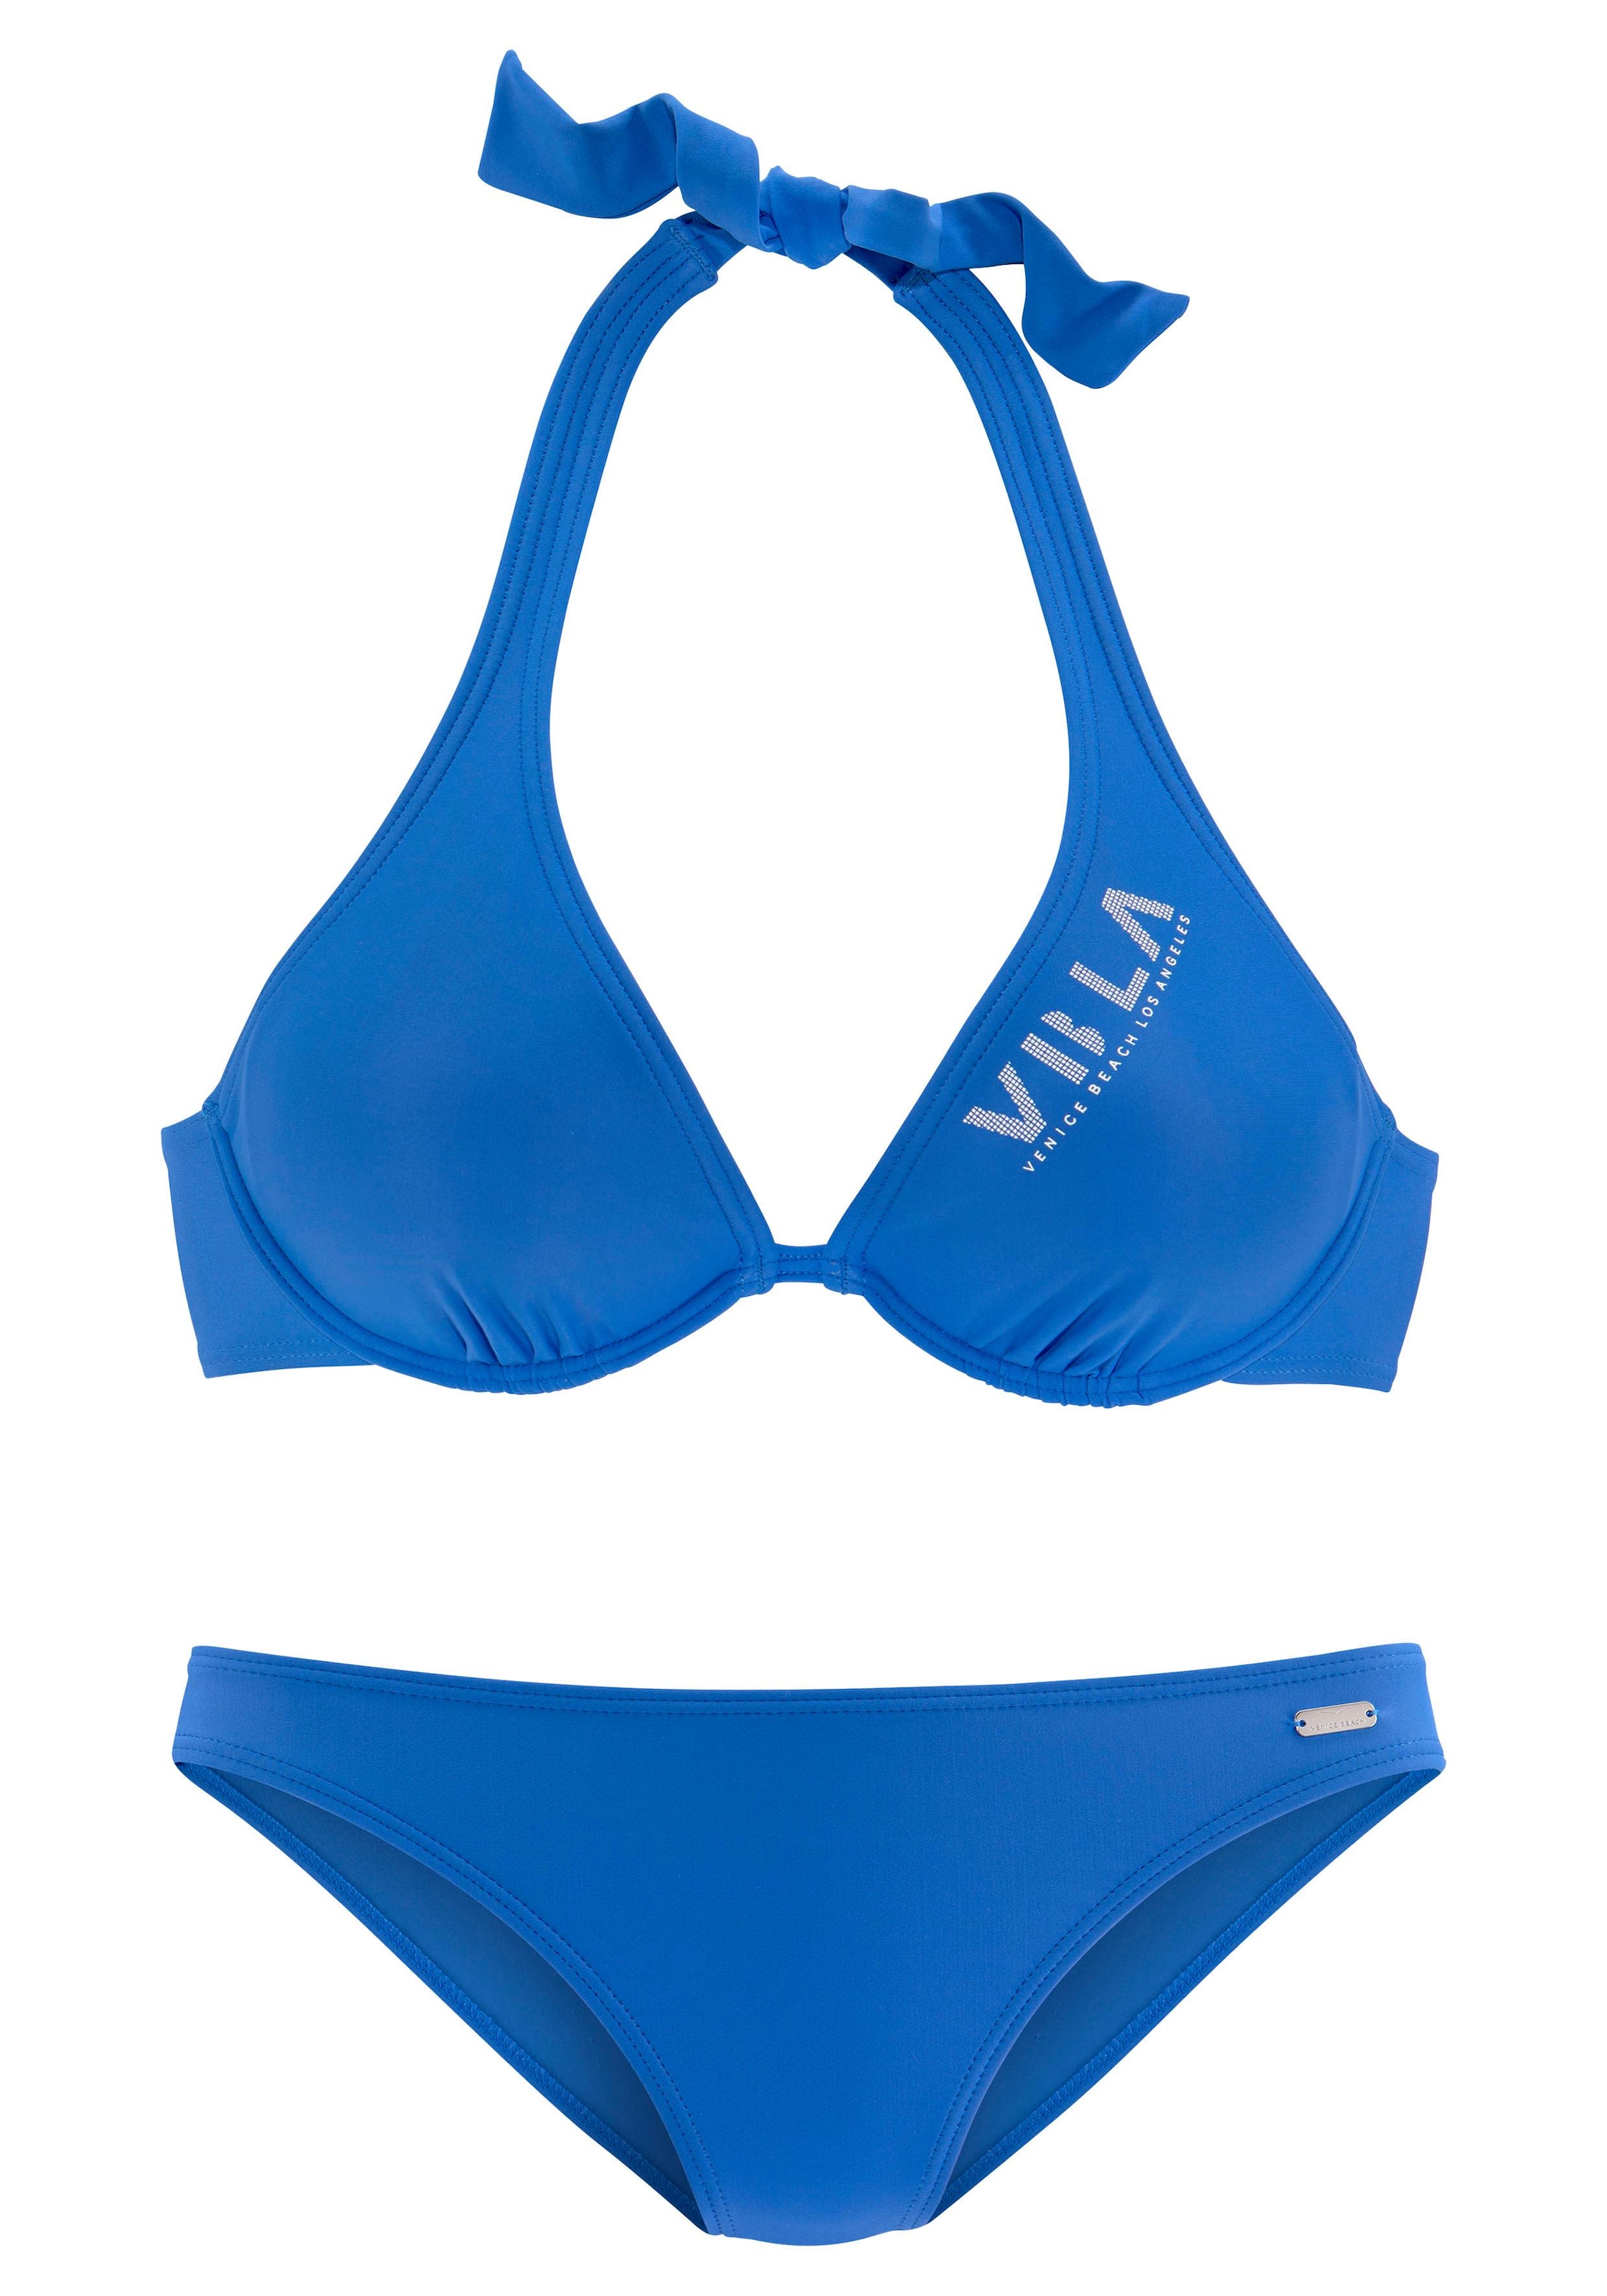 Venice Beach Bügel-Bikini, mit kontrastfarbigen Schriftzug